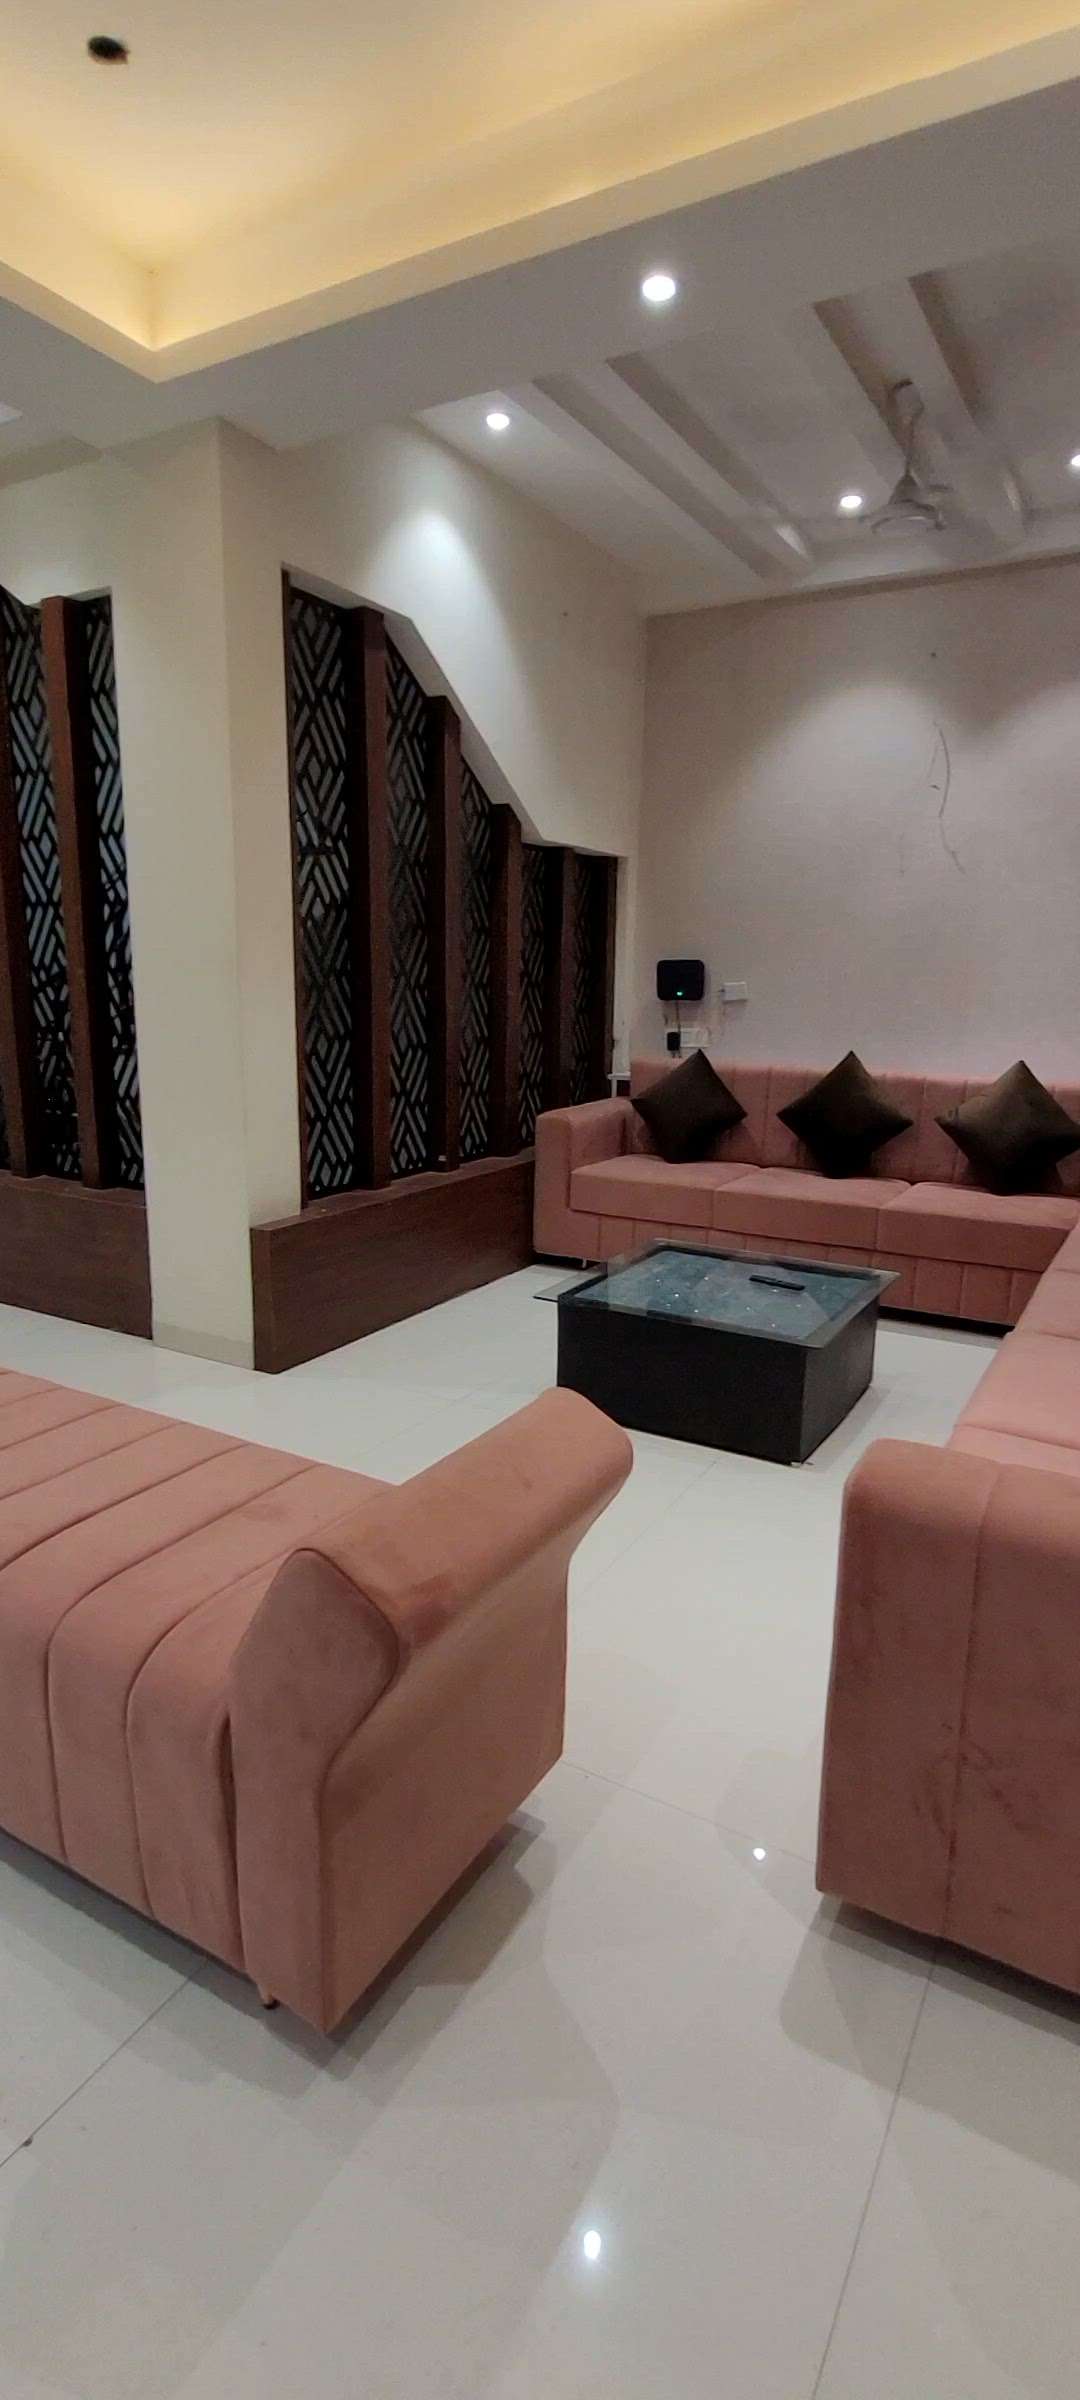 Interior Done right ✅️ 

#Interior #InteriorDesign #SOFA #PANEL #SlidingWindows #Curtains #upholstery #colour